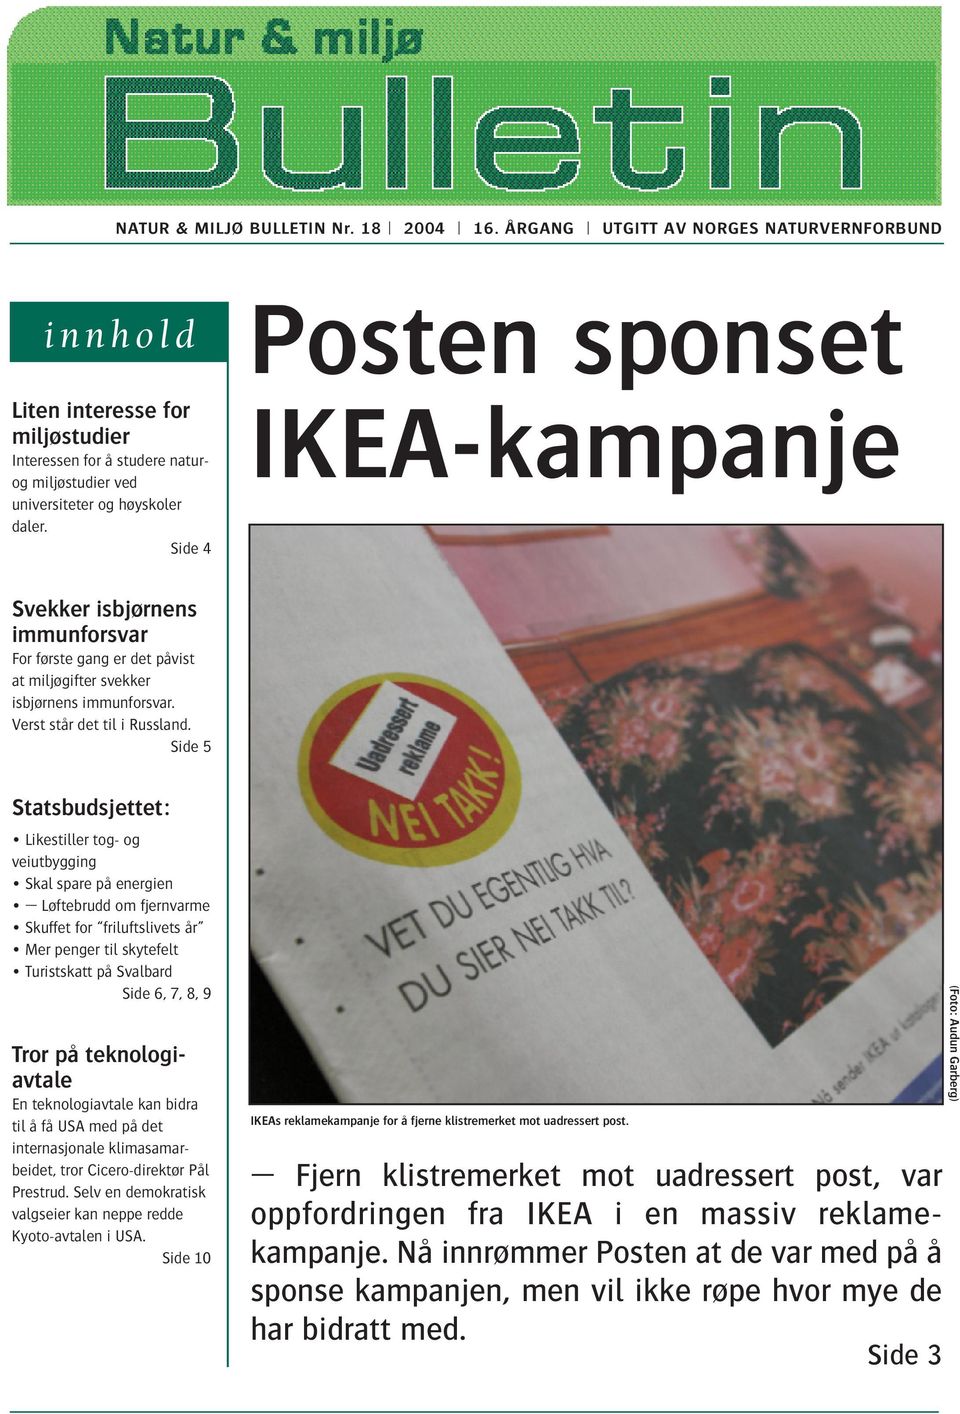 Posten sponset IKEA-kampanje - PDF Gratis nedlasting